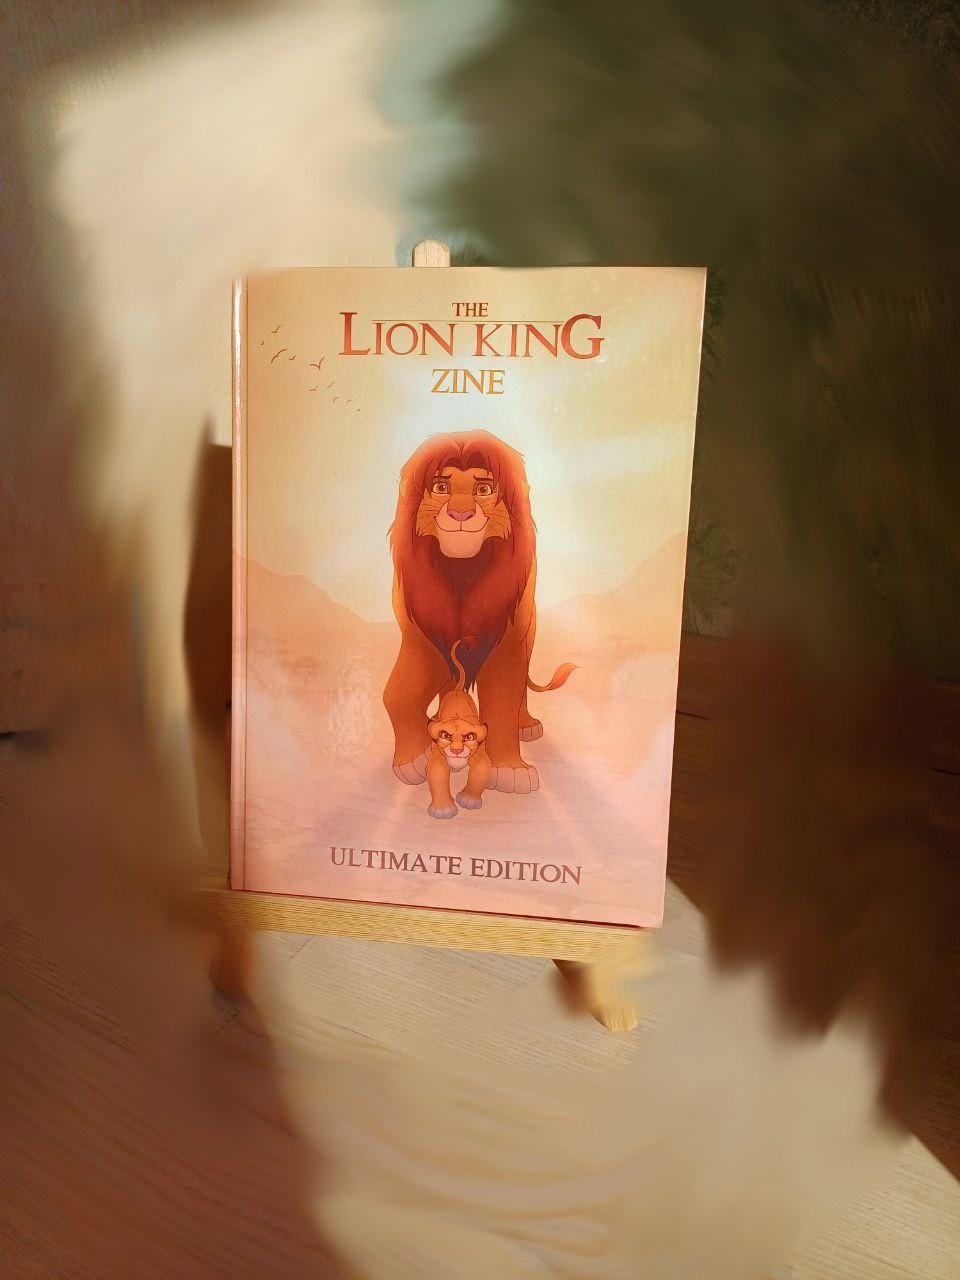 Ещё один фанатский зин на этот раз по "Королю Льву" от ребят из [club218581758|The Lion King zine: the Ultimate Edition]...